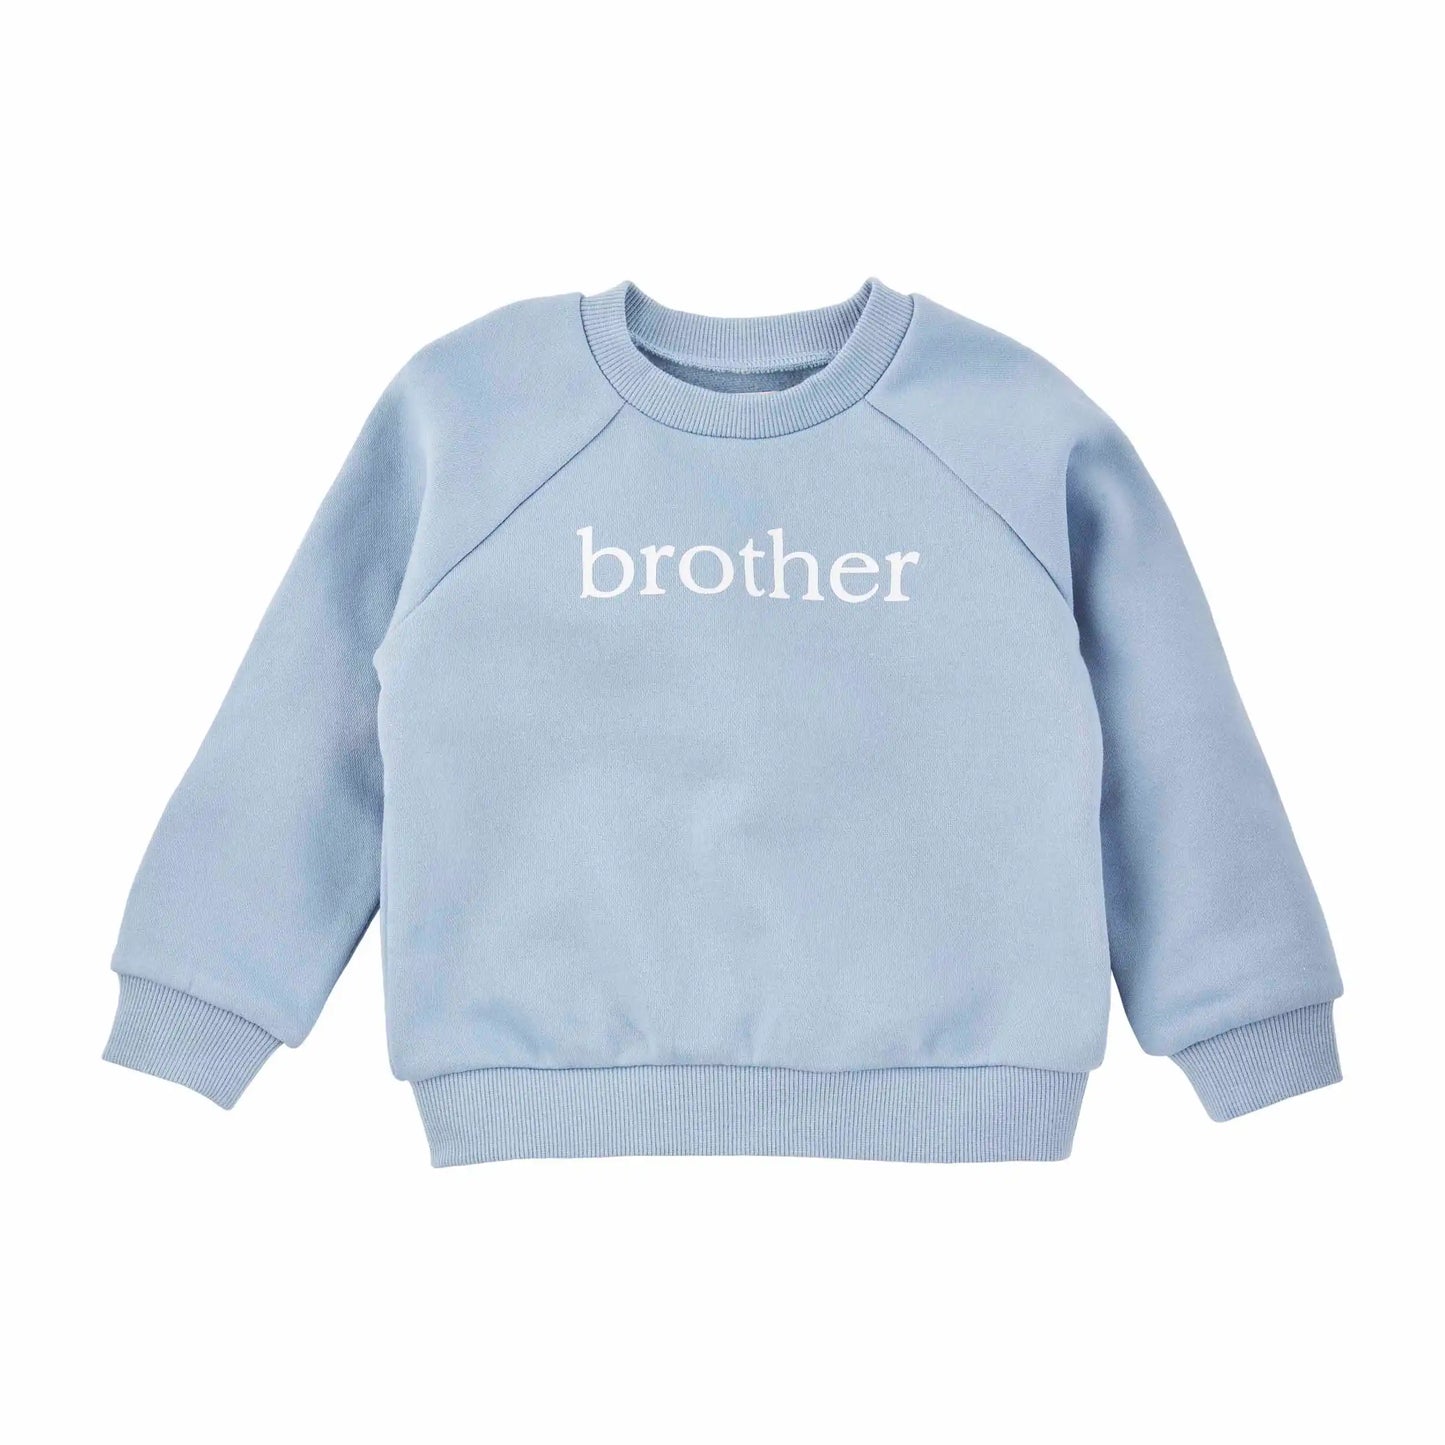 Brother Sweatshirt  - Doodlebug's Children's Boutique